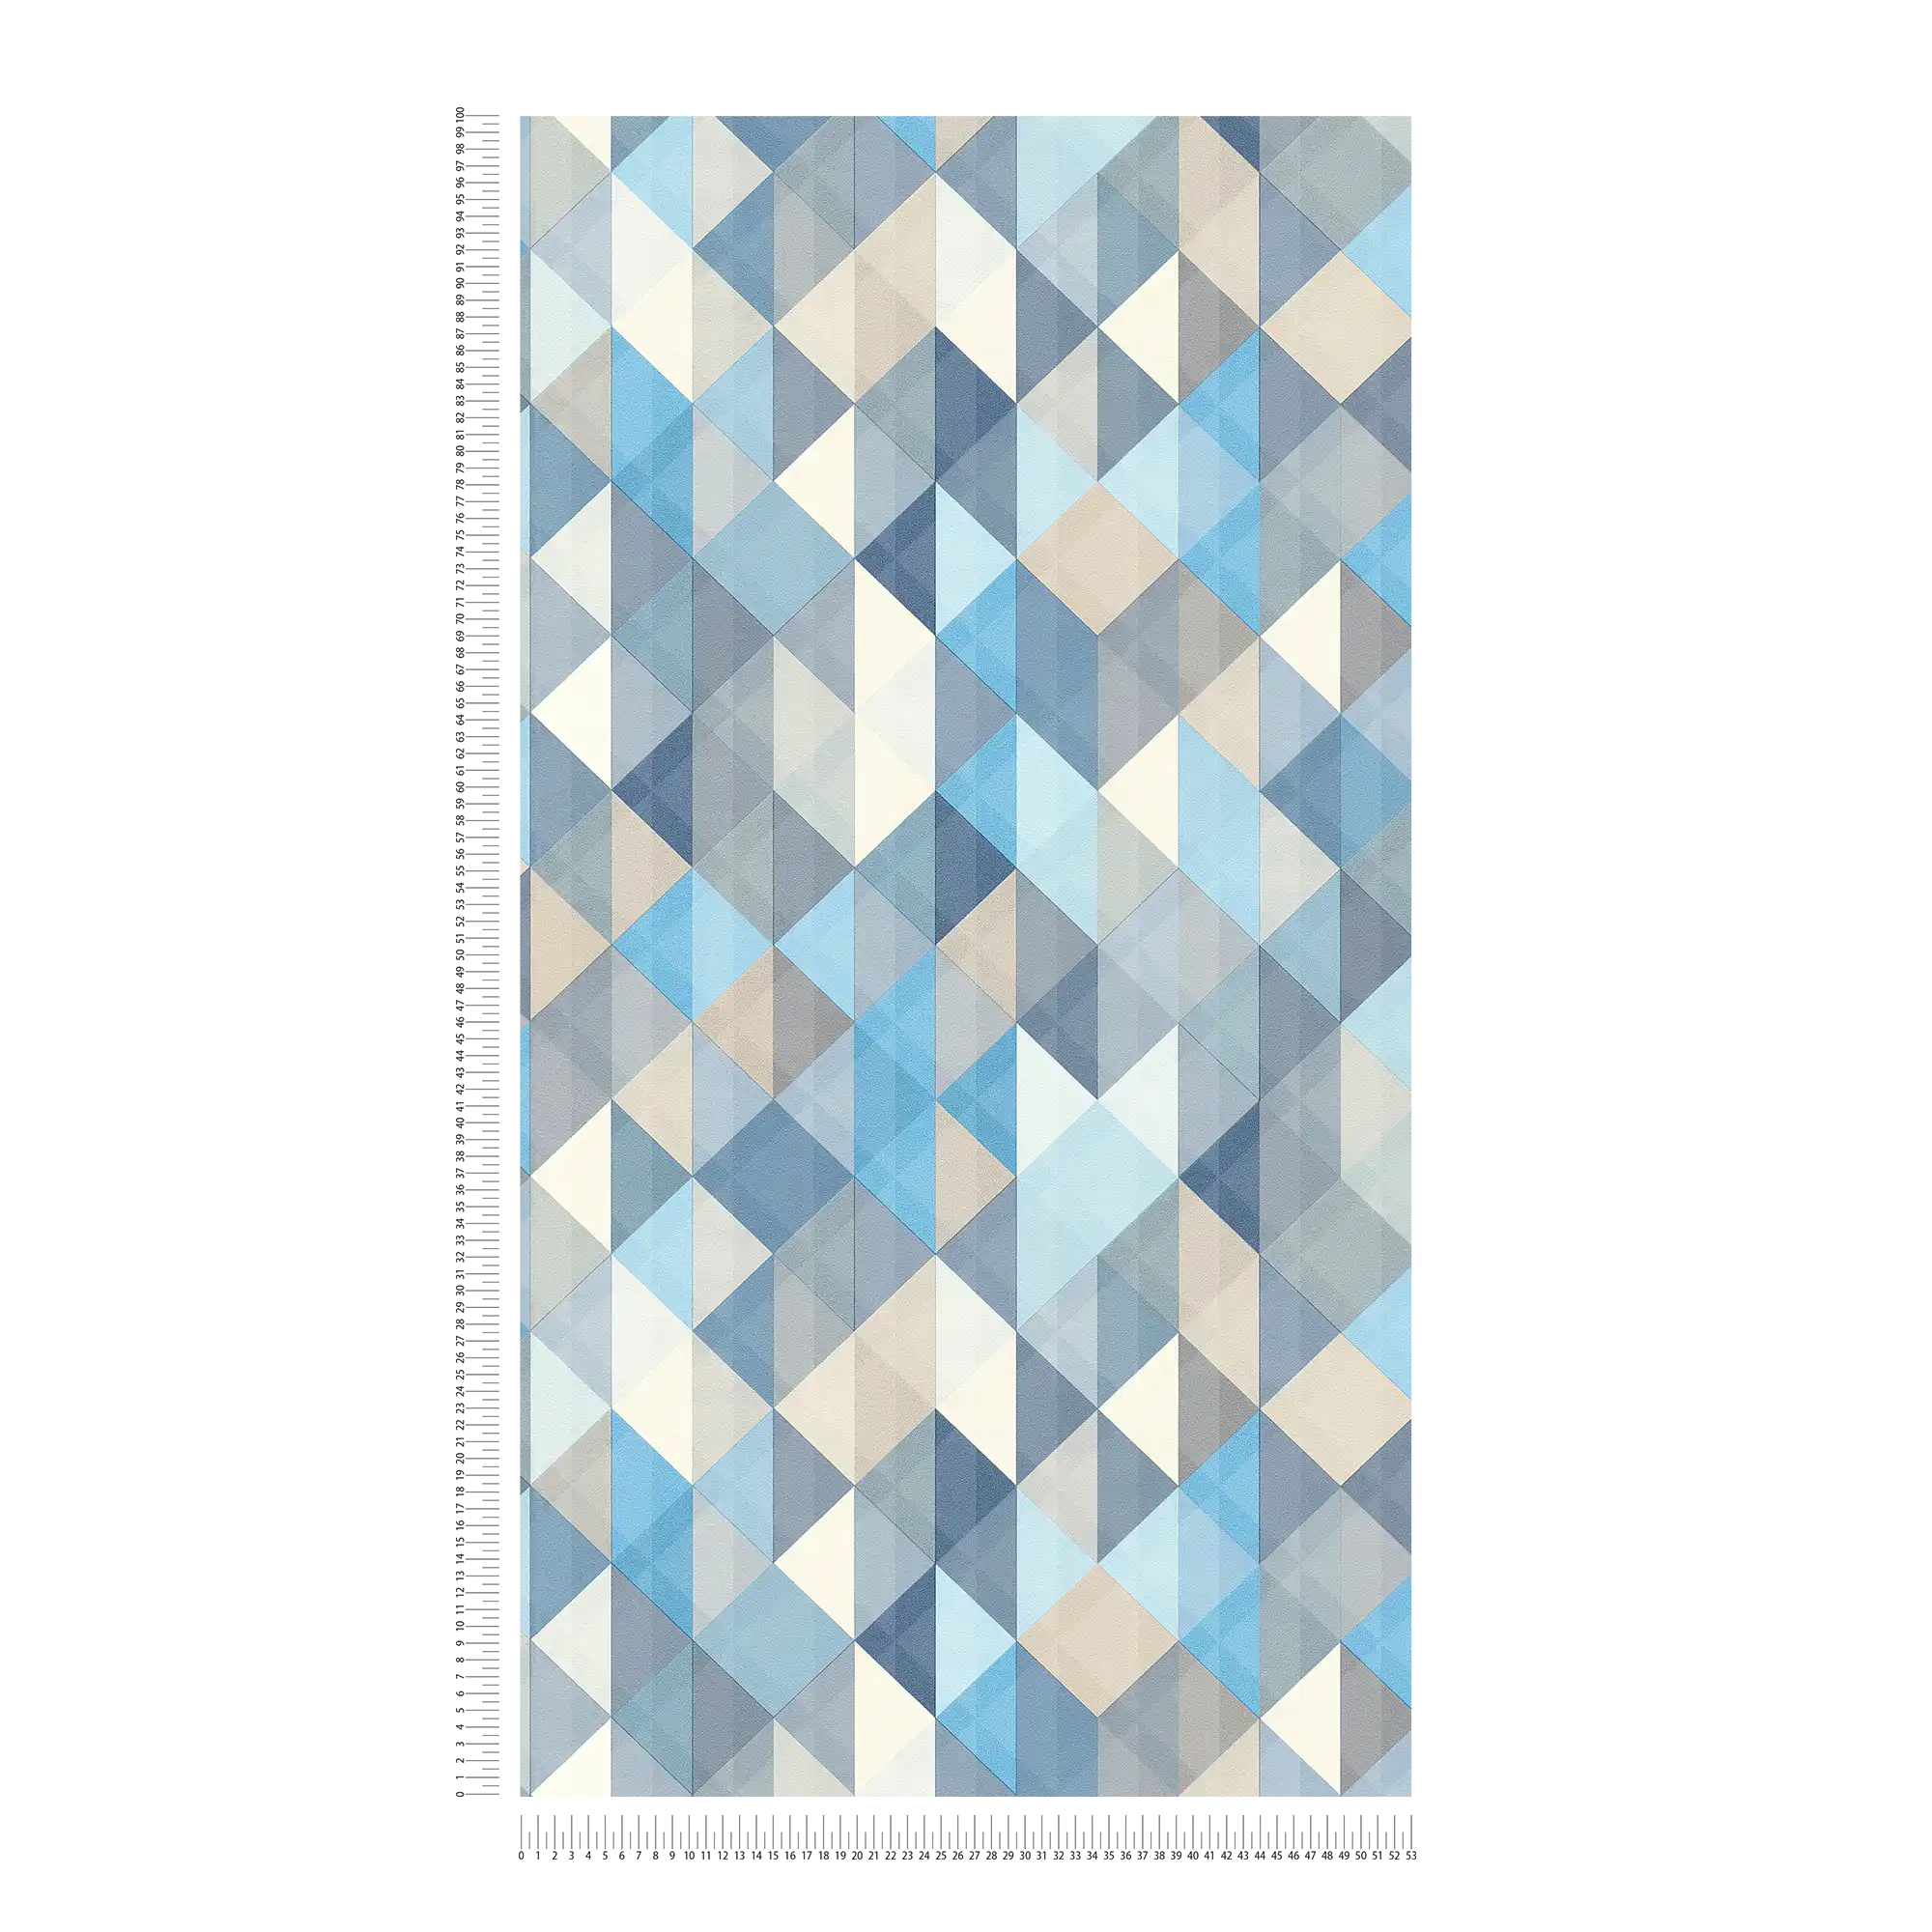             Tapete Scandinavian Style mit geometrischem Muster – Blau, Grau, Beige
        